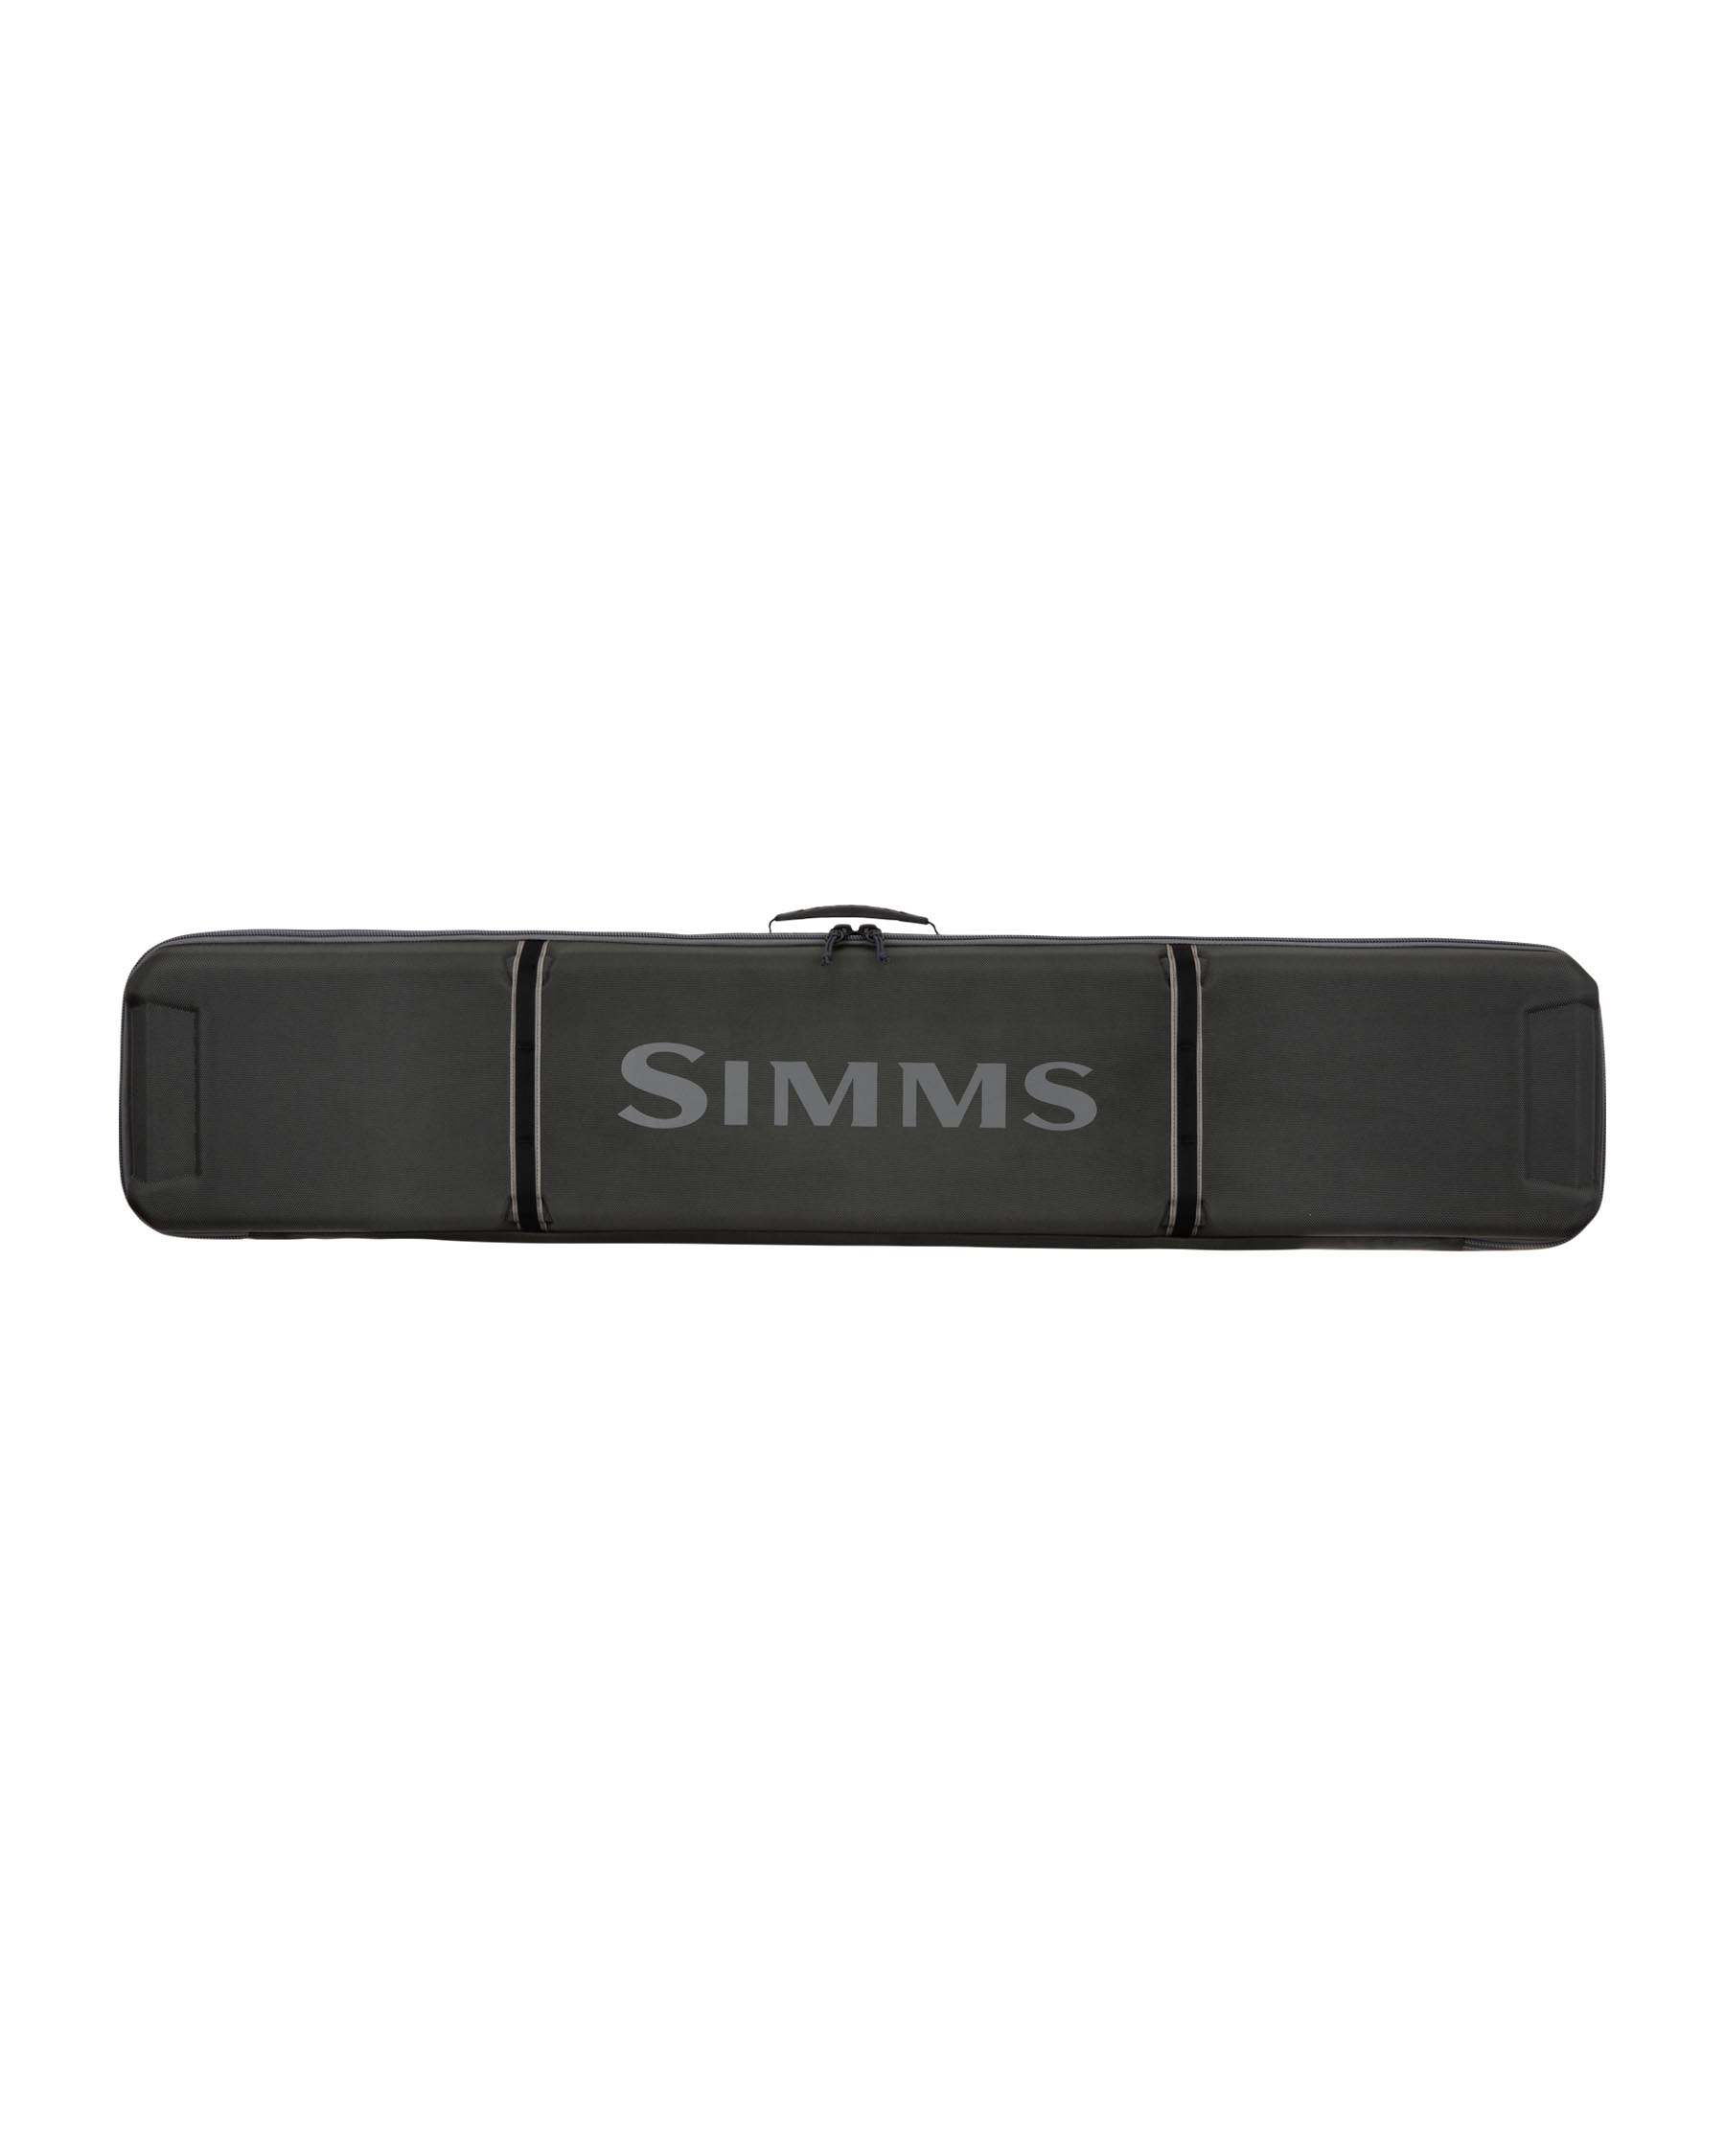 Simms GTS Single Rod/Reel Vault - 9' 4 Piece - Carbon